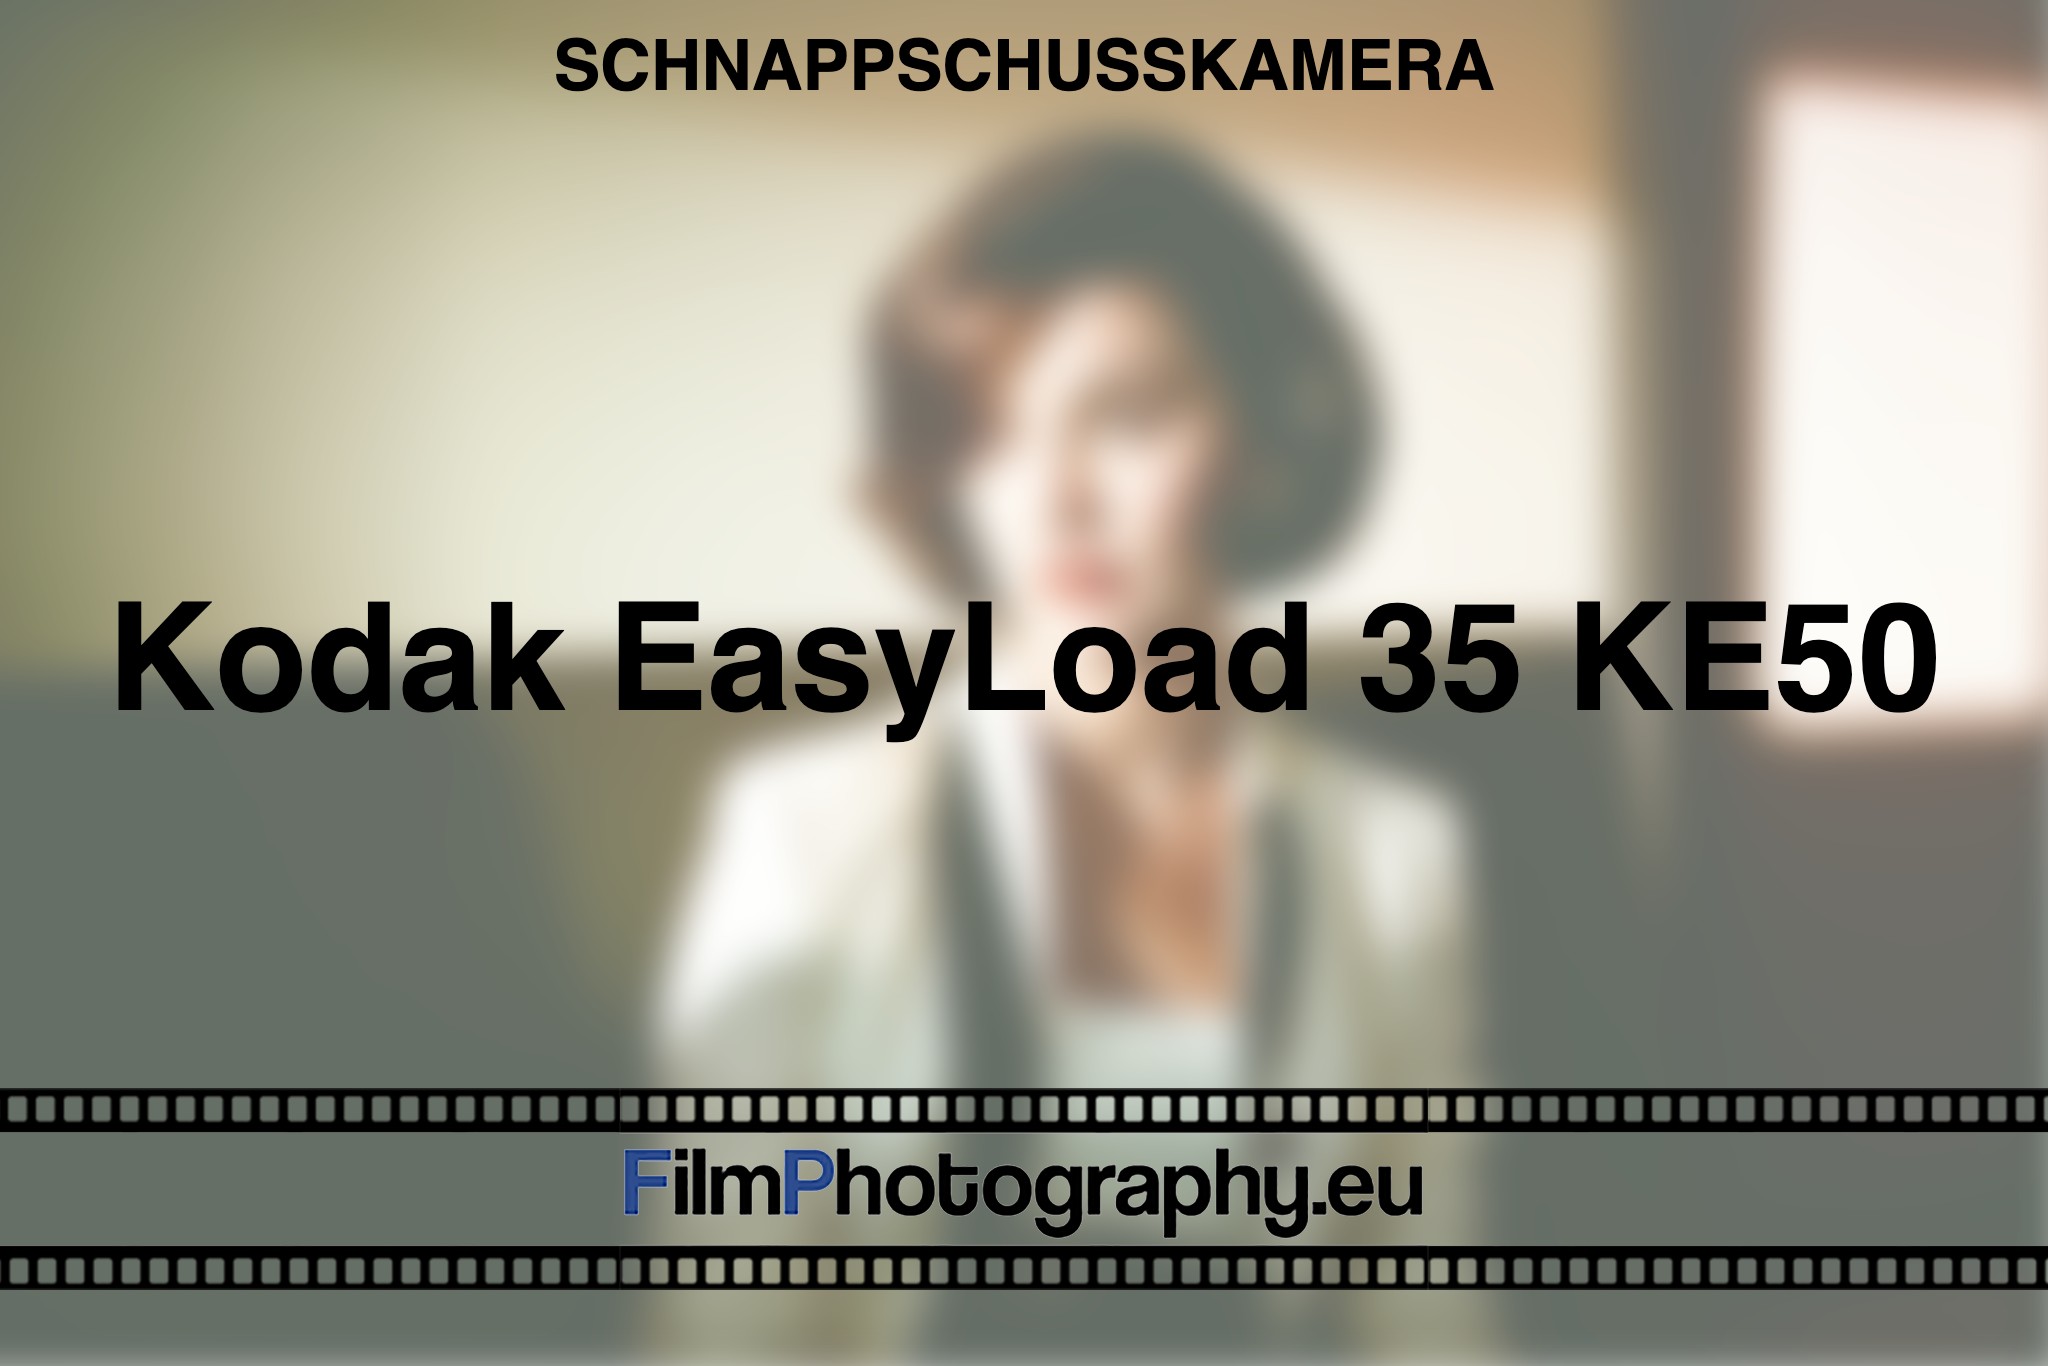 kodak-easyload-35-ke50-schnappschusskamera-bnv